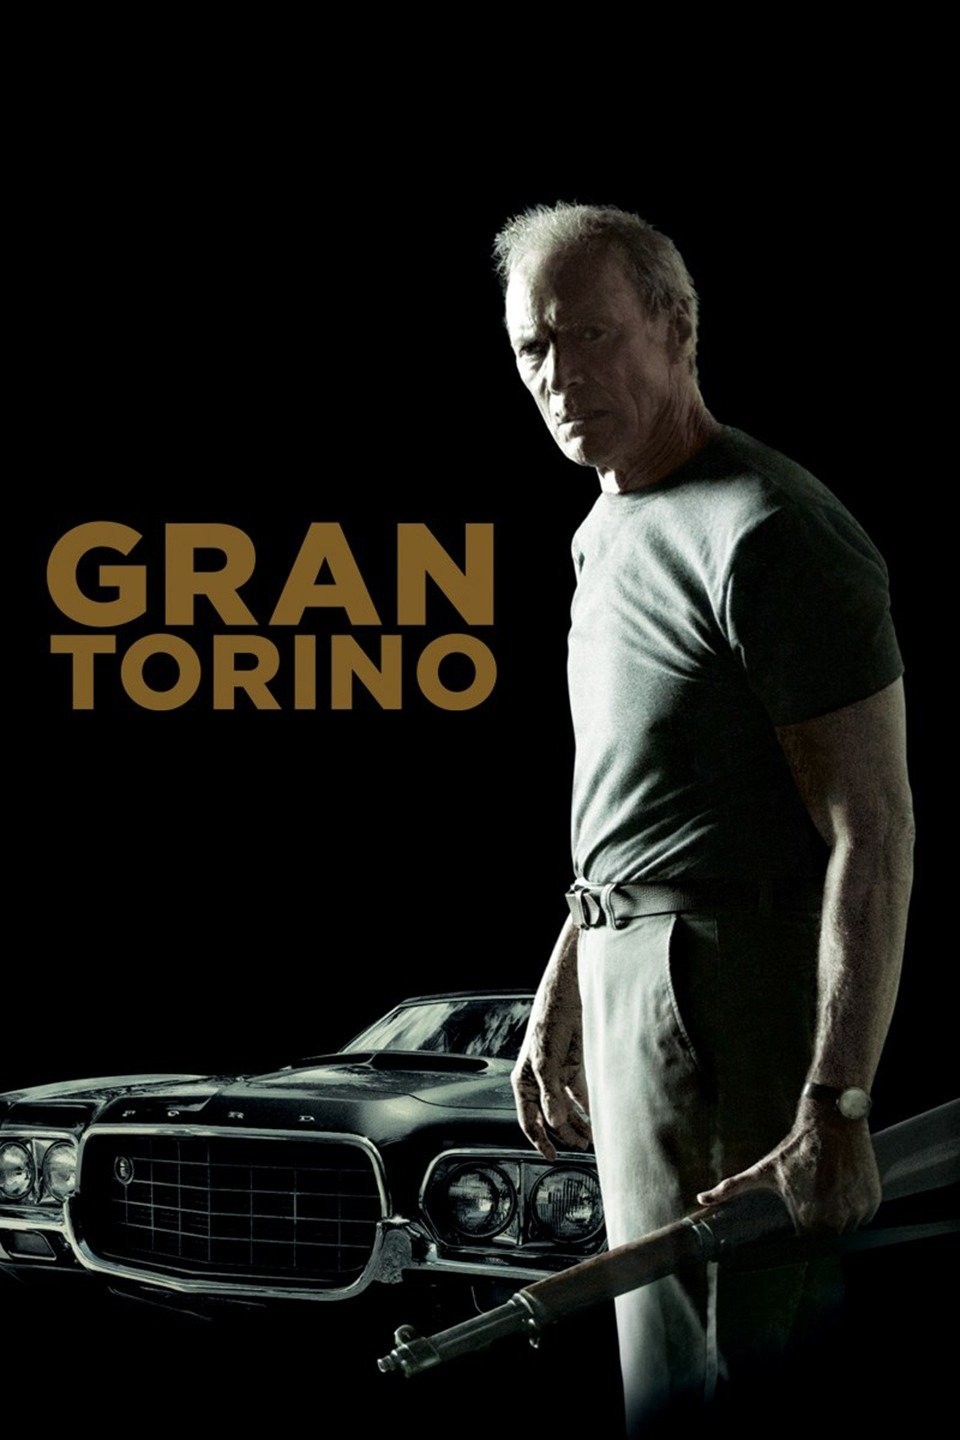 gran torino movie review rotten tomatoes